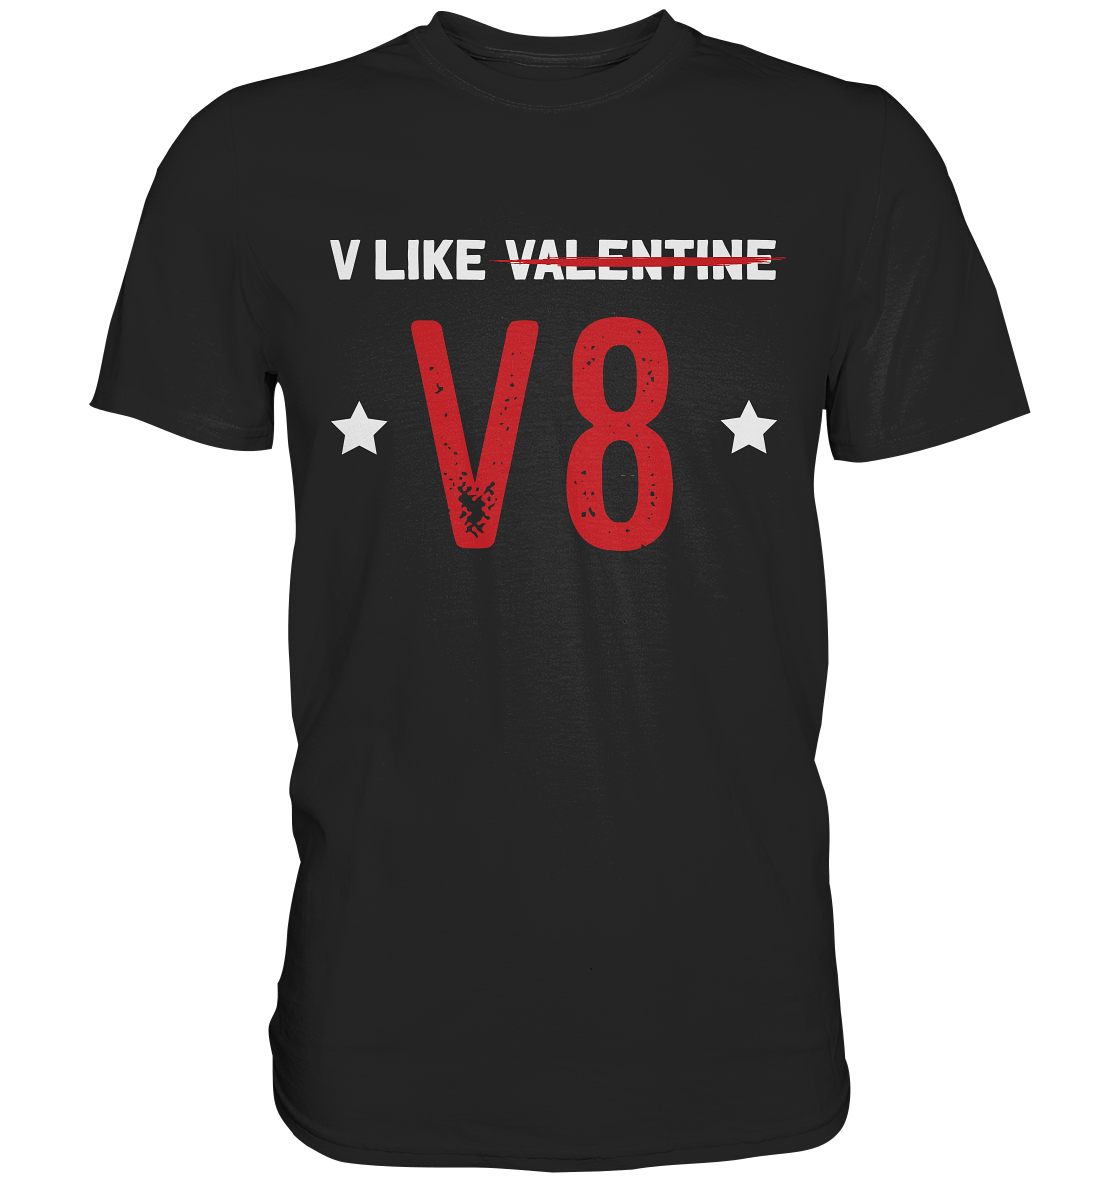 V like V8 - Premium Shirt